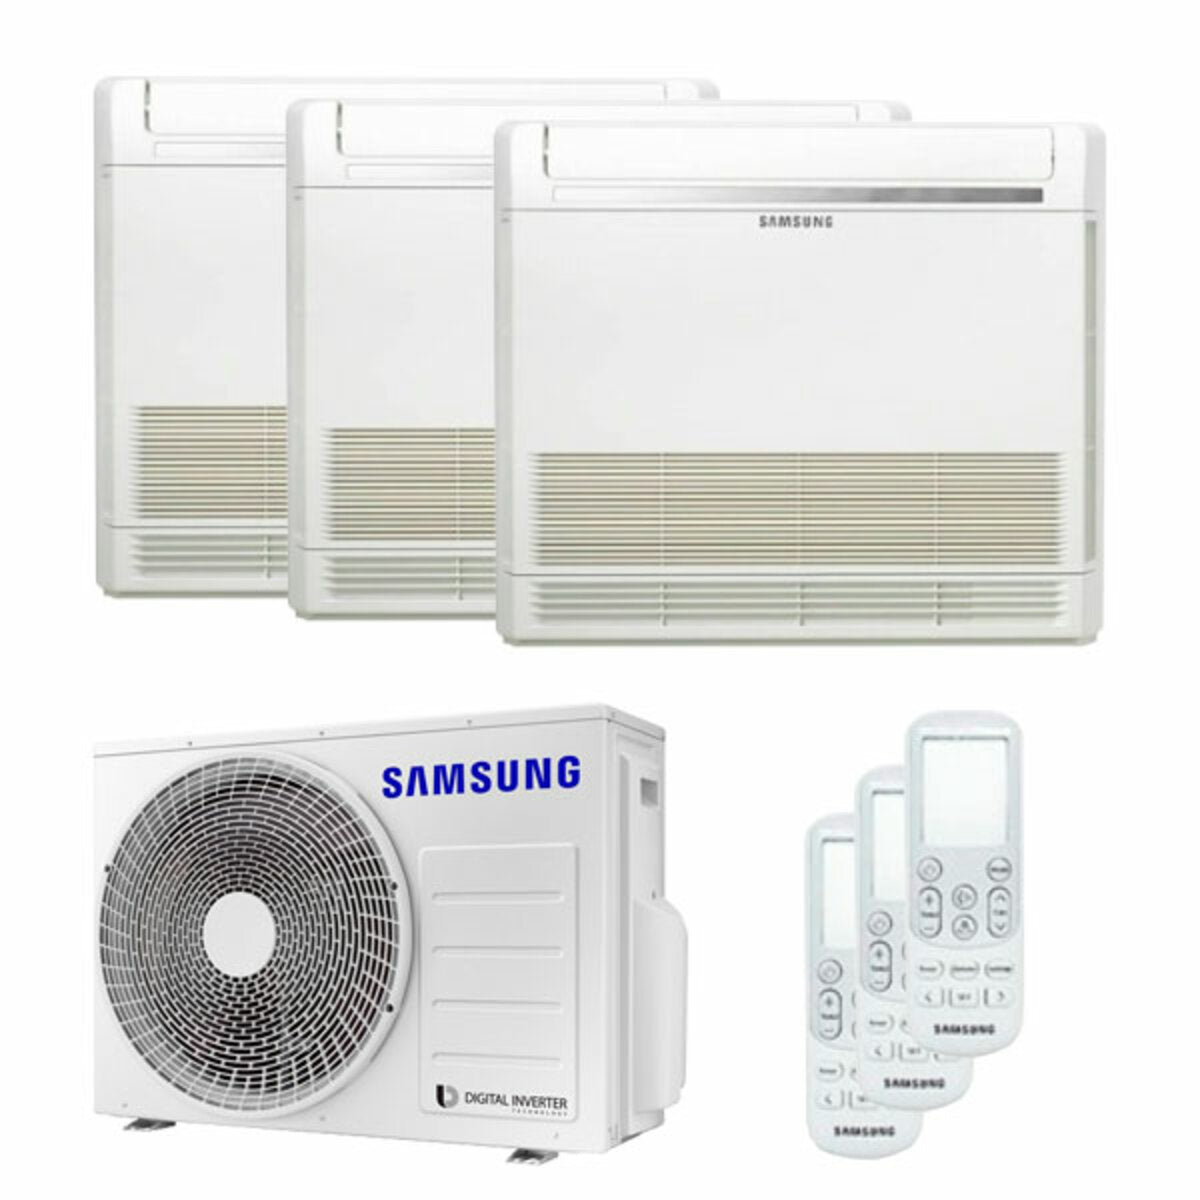 Samsung air conditioner console trial split 9000 + 9000 + 9000 BTU inverter A +++ outdoor unit 5.2 kW